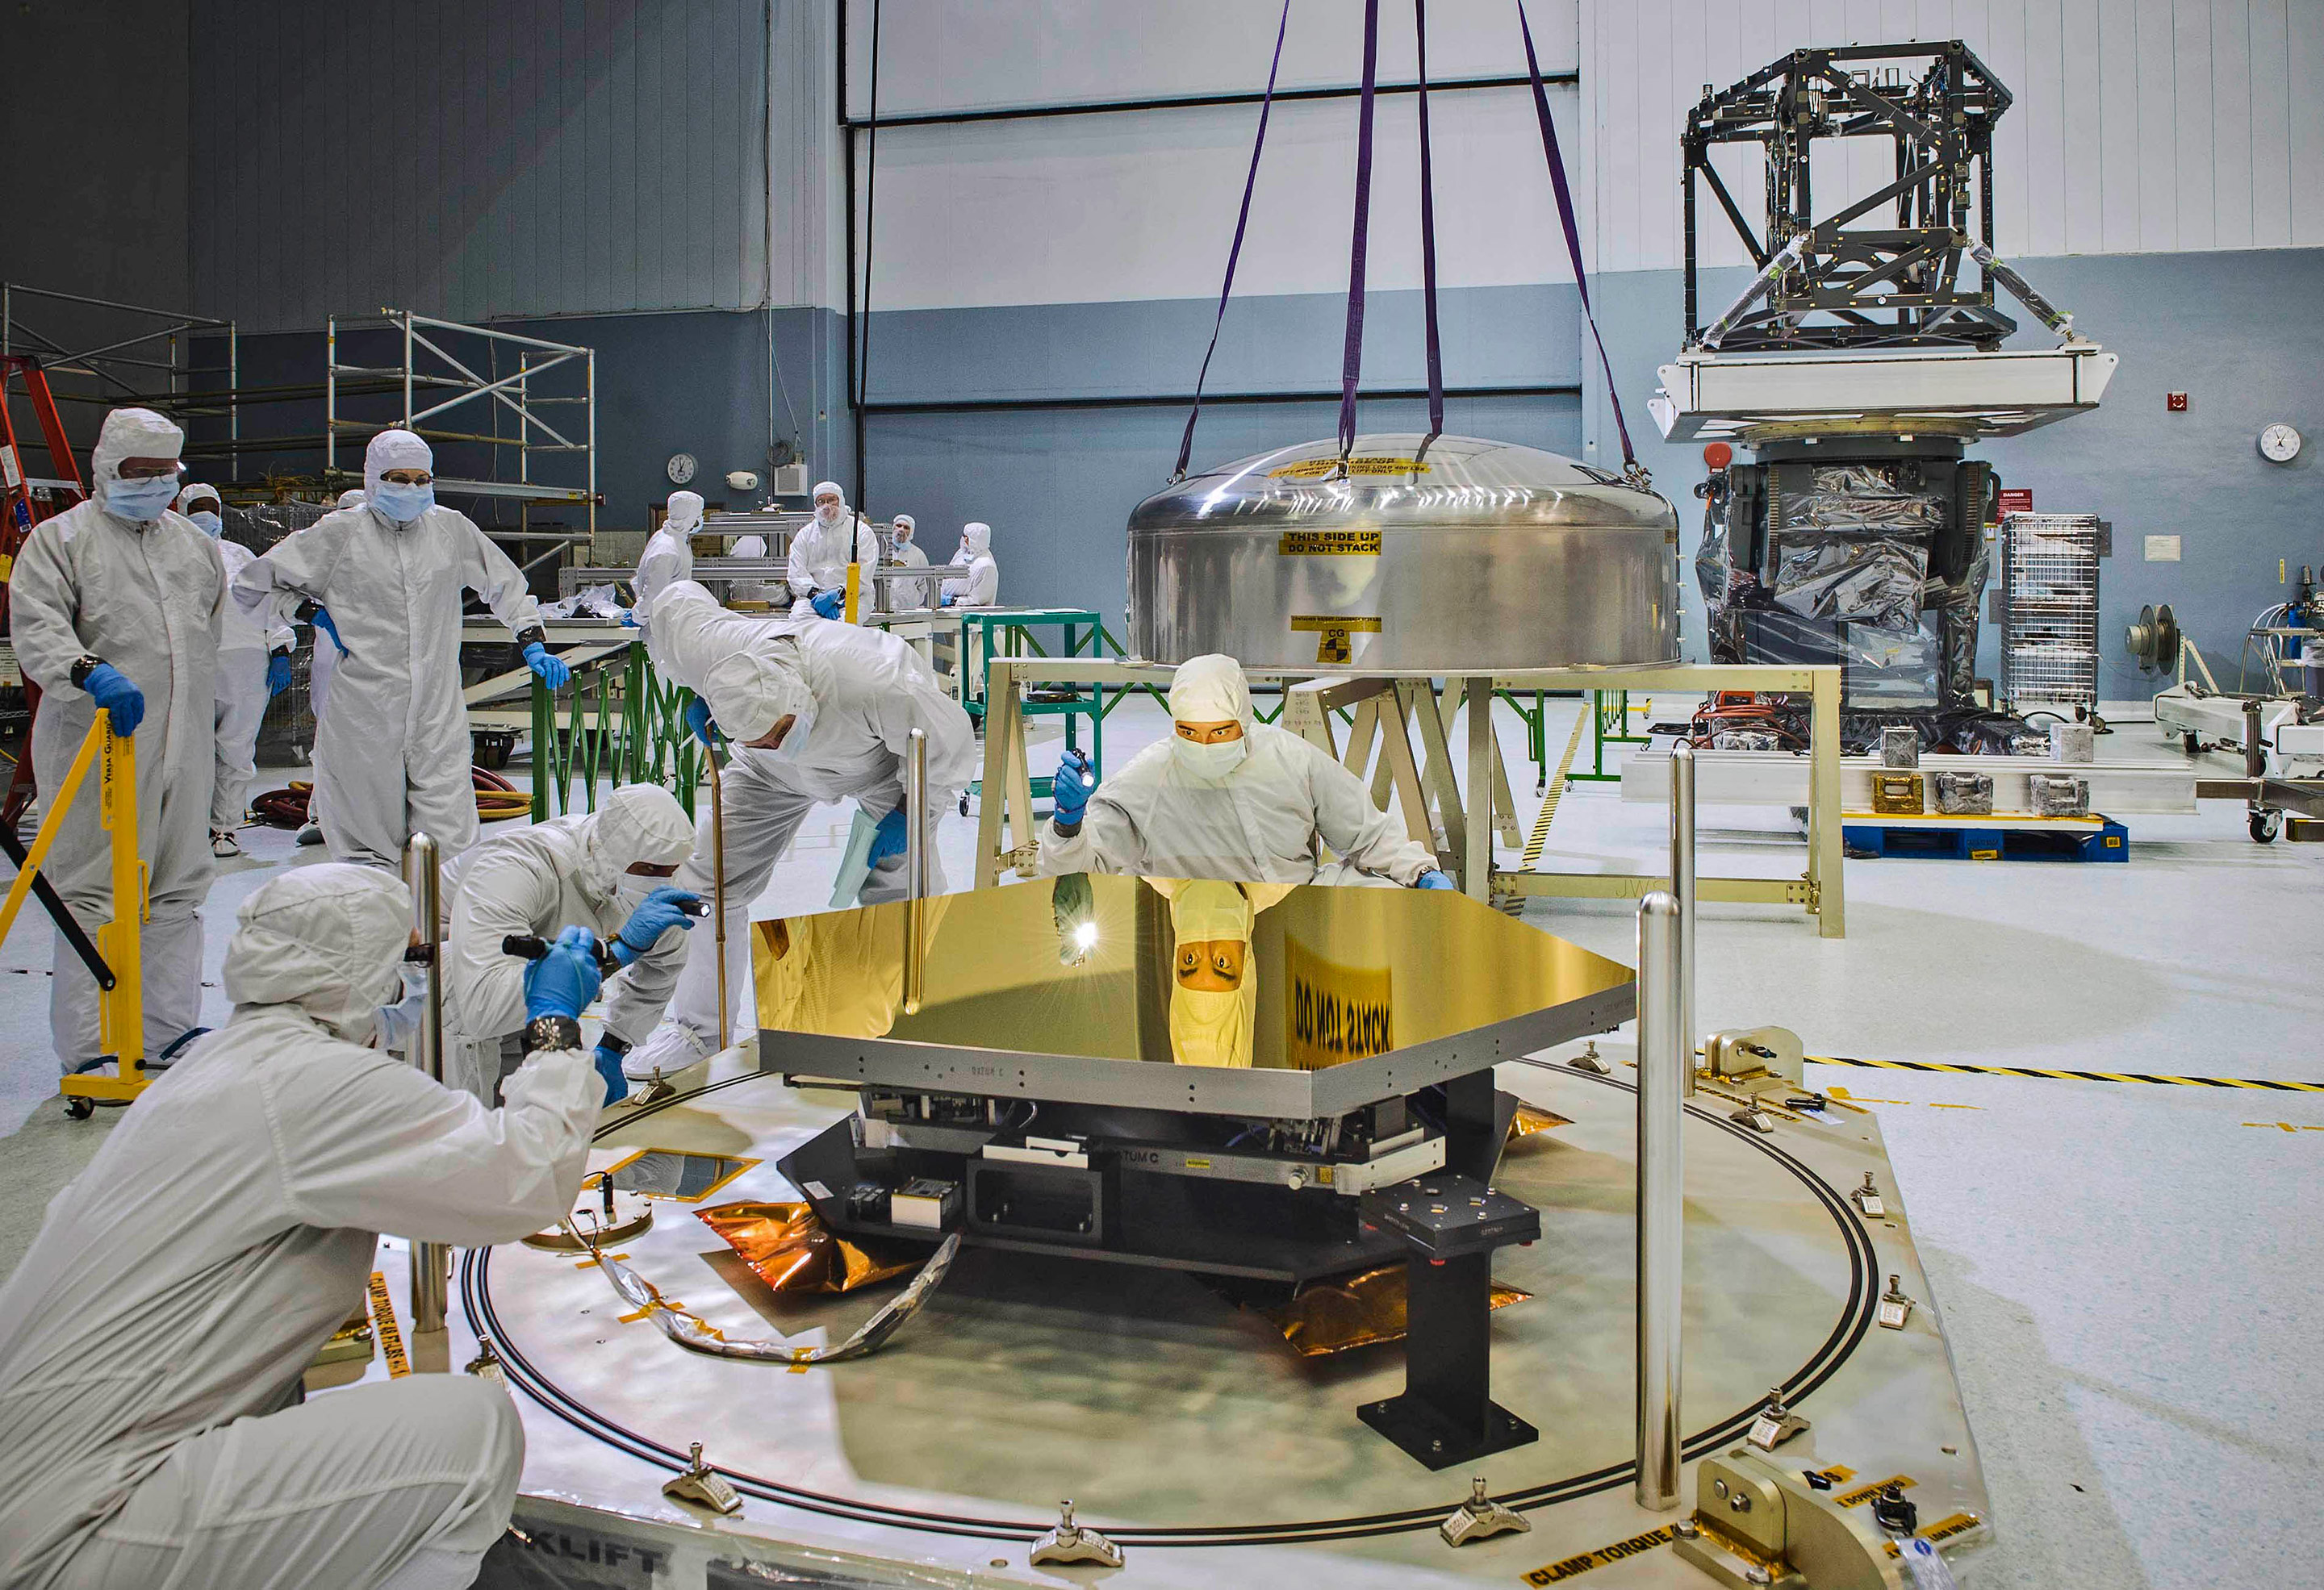 Meet NASA’s James Webb Space Telescope - Launch Date: 2018 - RocketSTEM